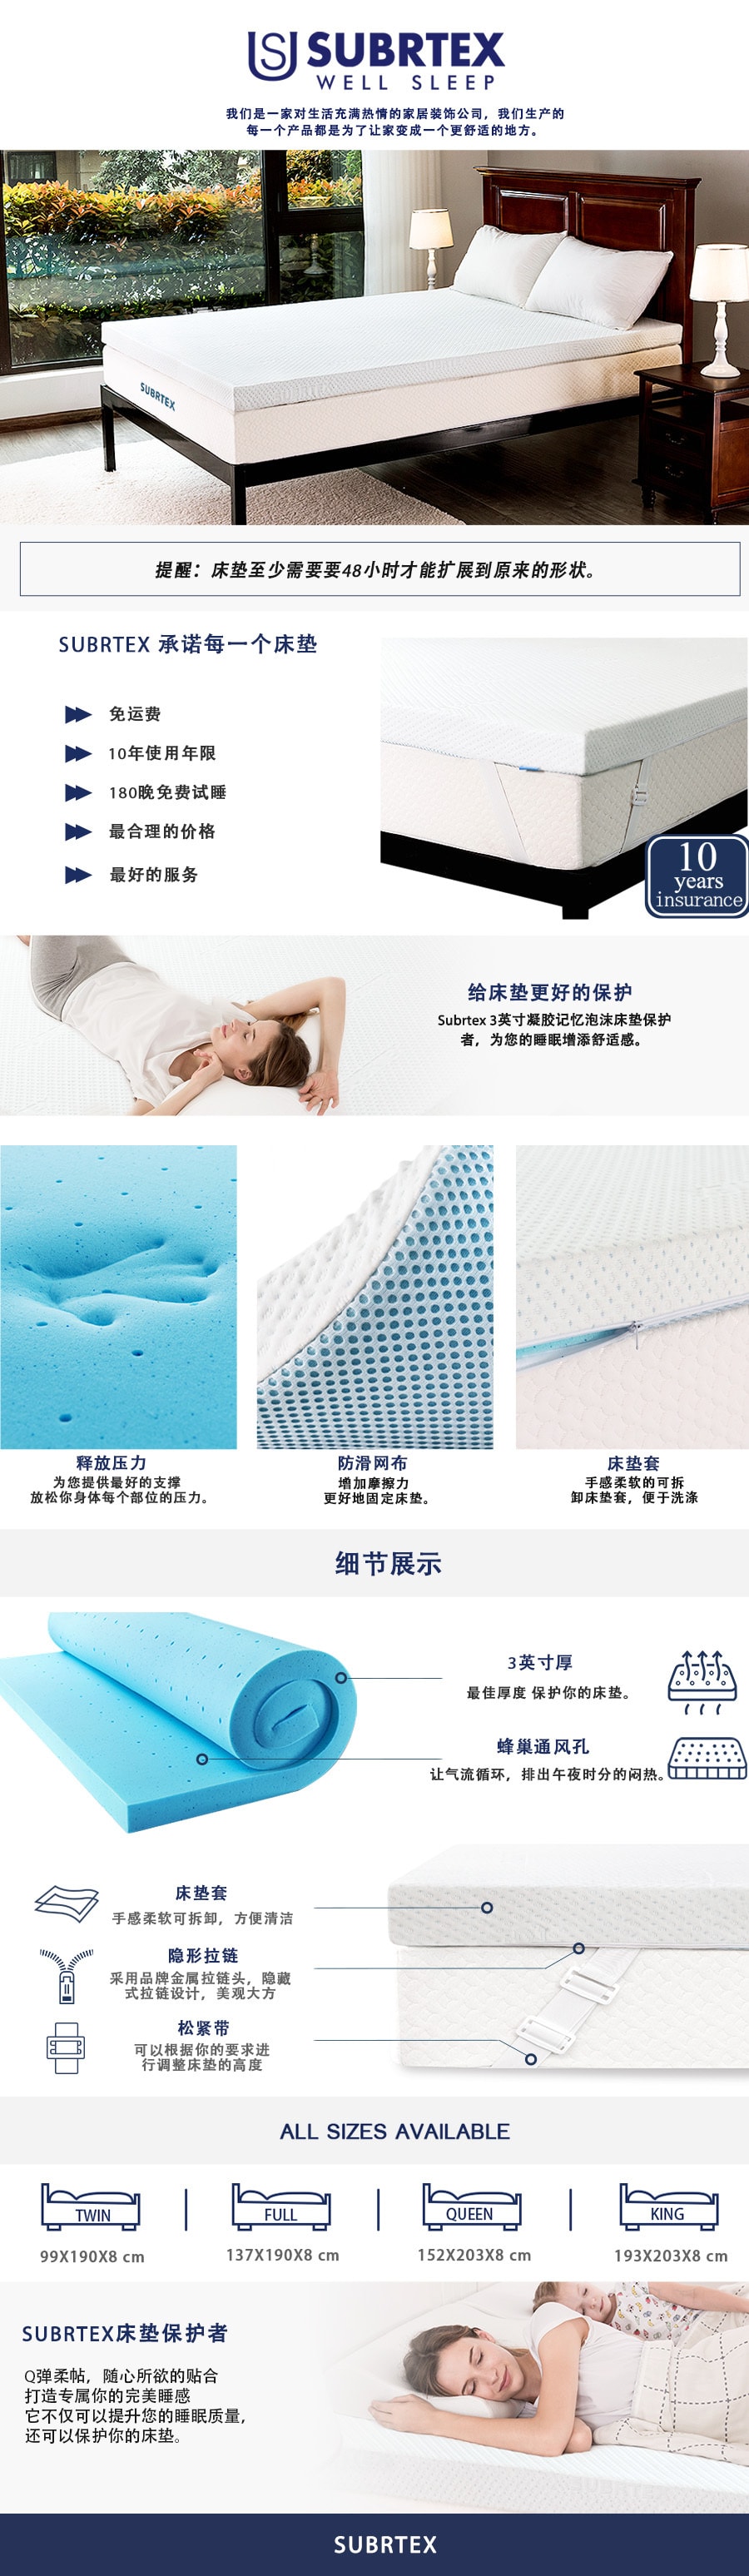 SUBRTEX 3英寸 薄款记忆棉床垫 床垫保护垫 慢回弹海绵软垫 Full 13公斤